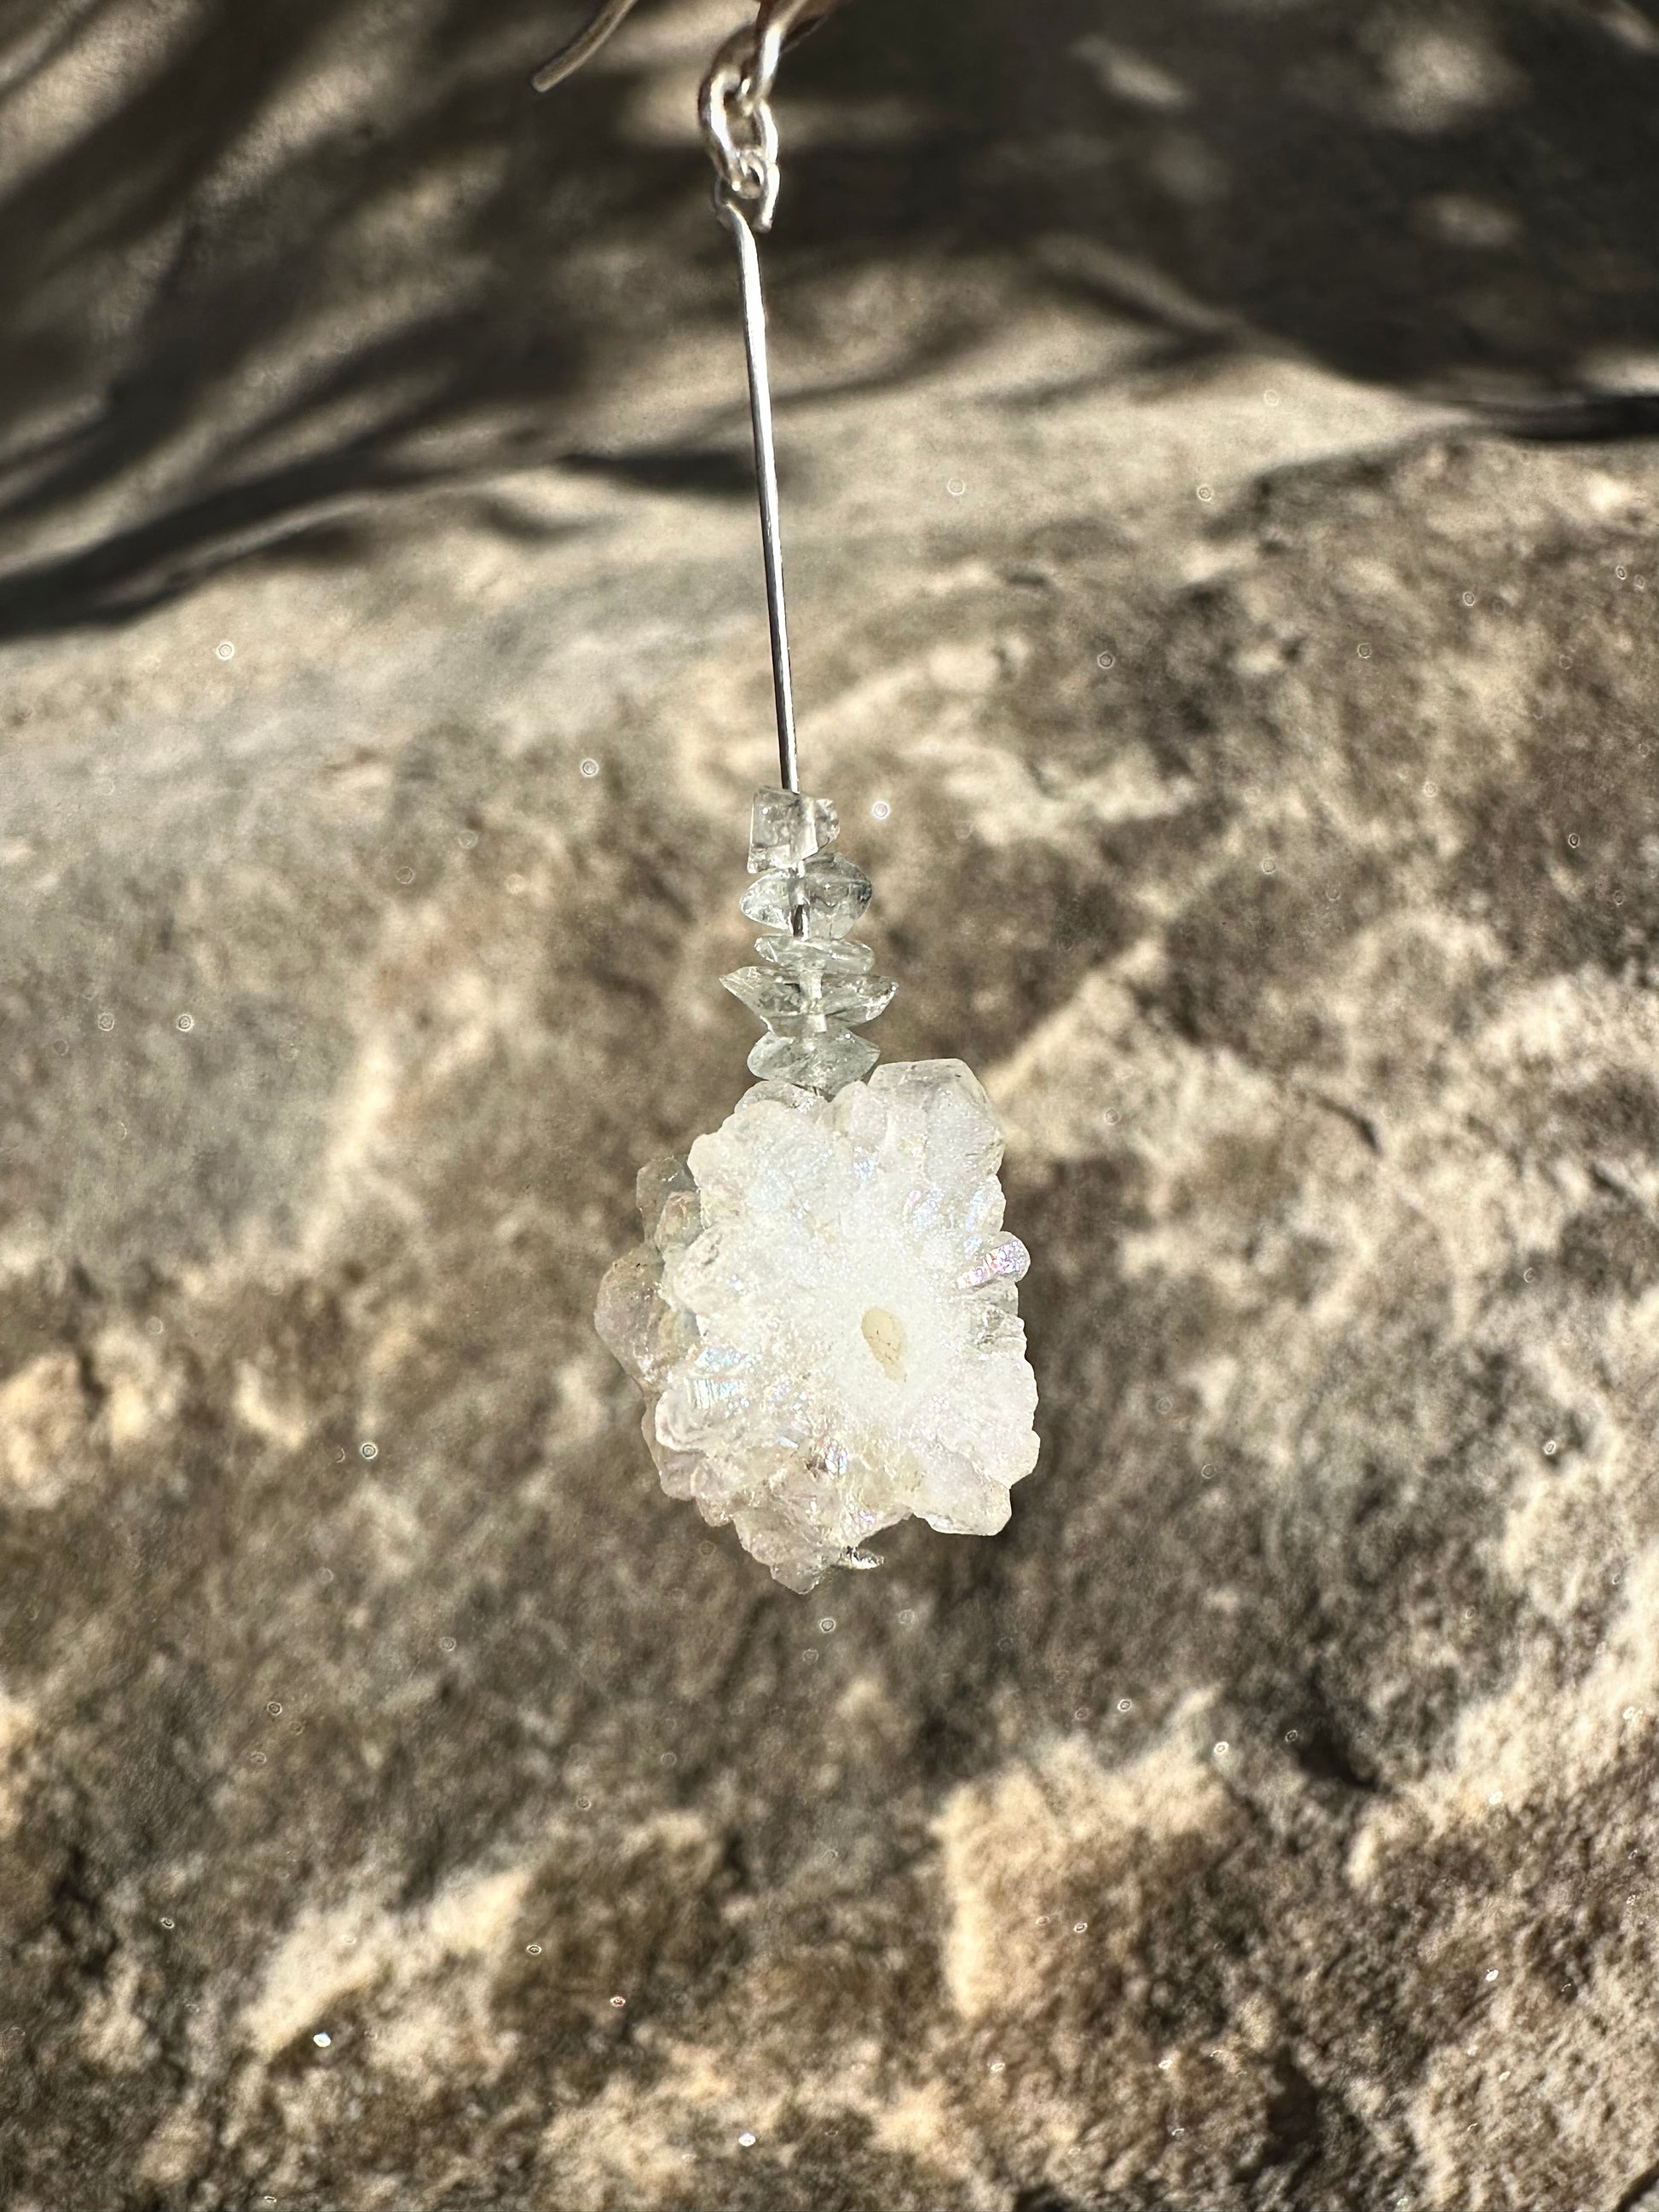 Akamu drop earrings, aquamarine drop earrings, close-up silver earrings in front of rock